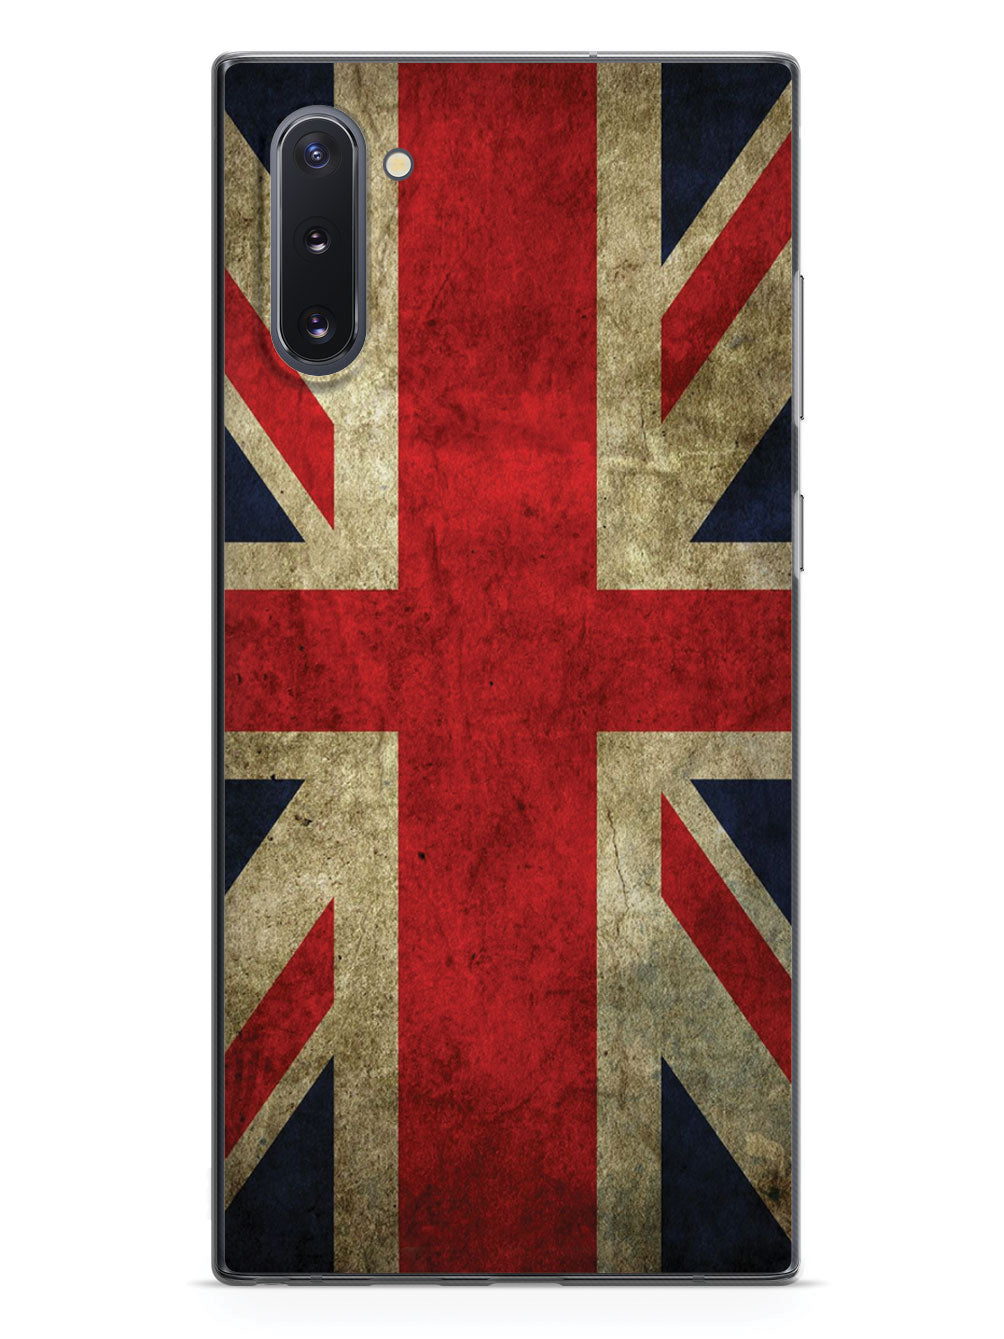 Vintage British Flag Case